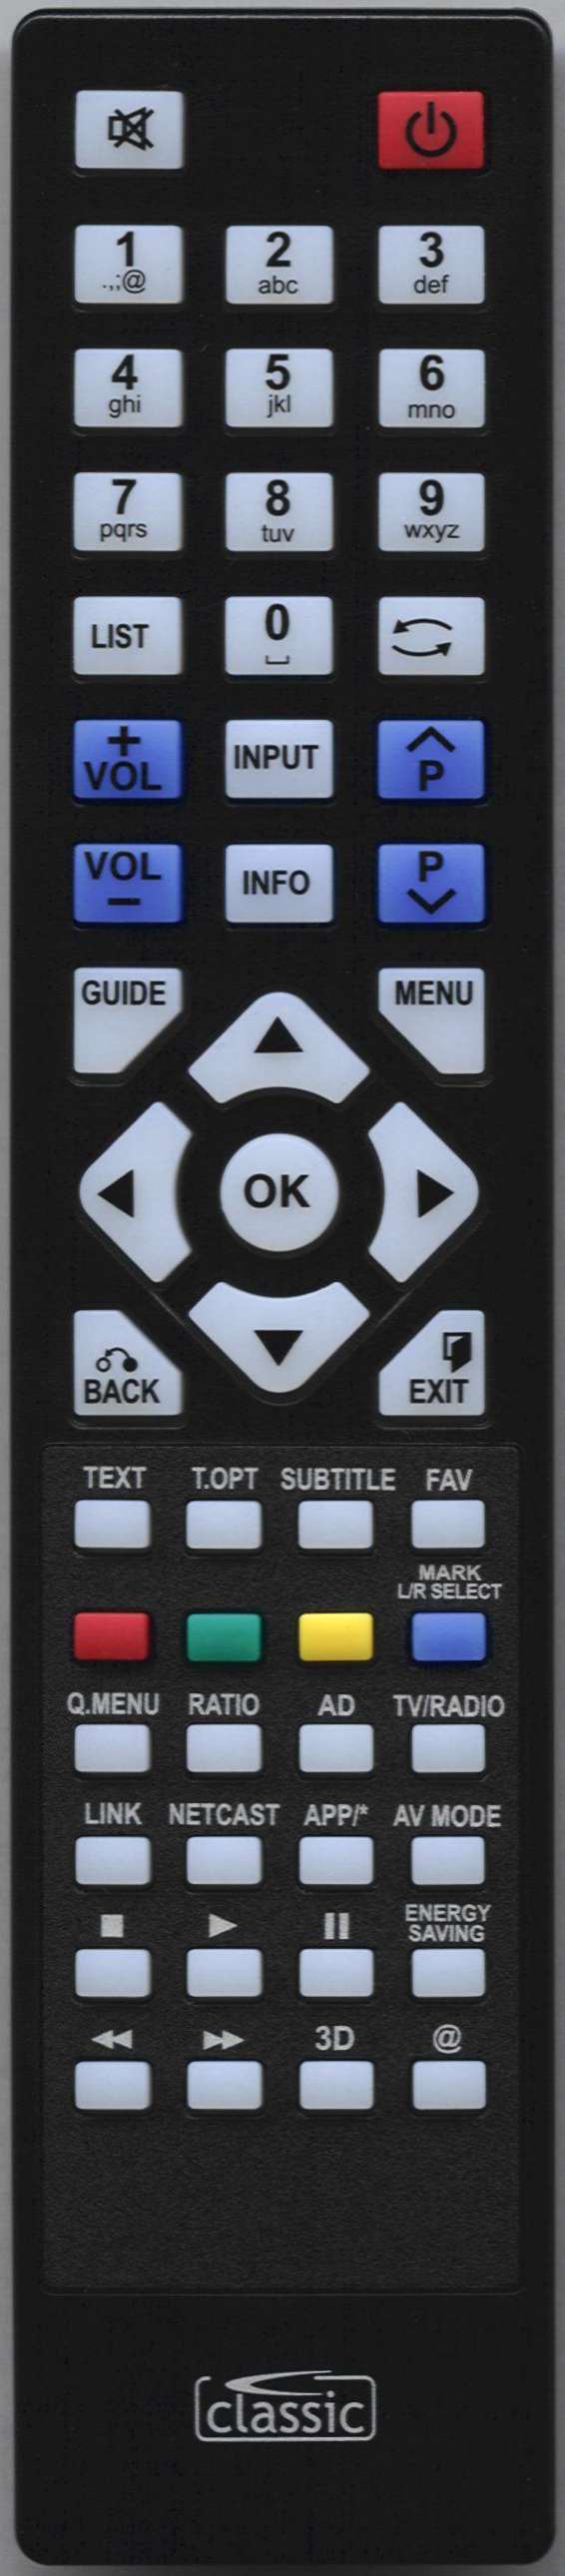 LG 42LD490 Remote Control Alternative